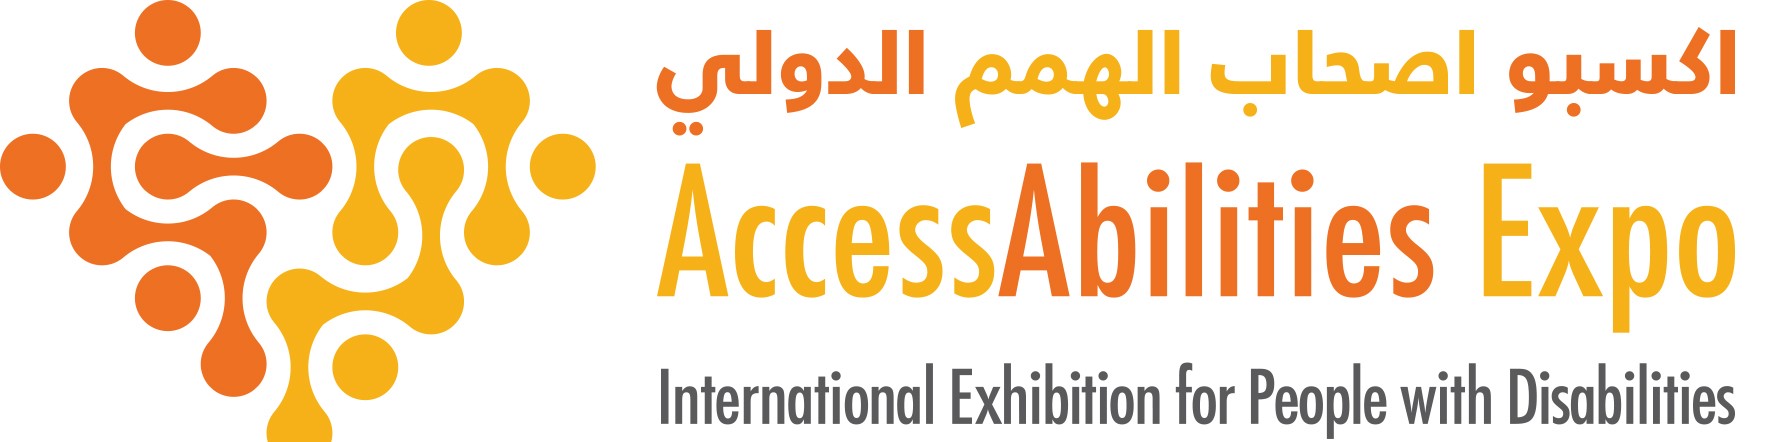 AccessAbilities Expo, Dubai World Trade Centre, Sheikh Zayed Road,Dubai,United Arab Emirates